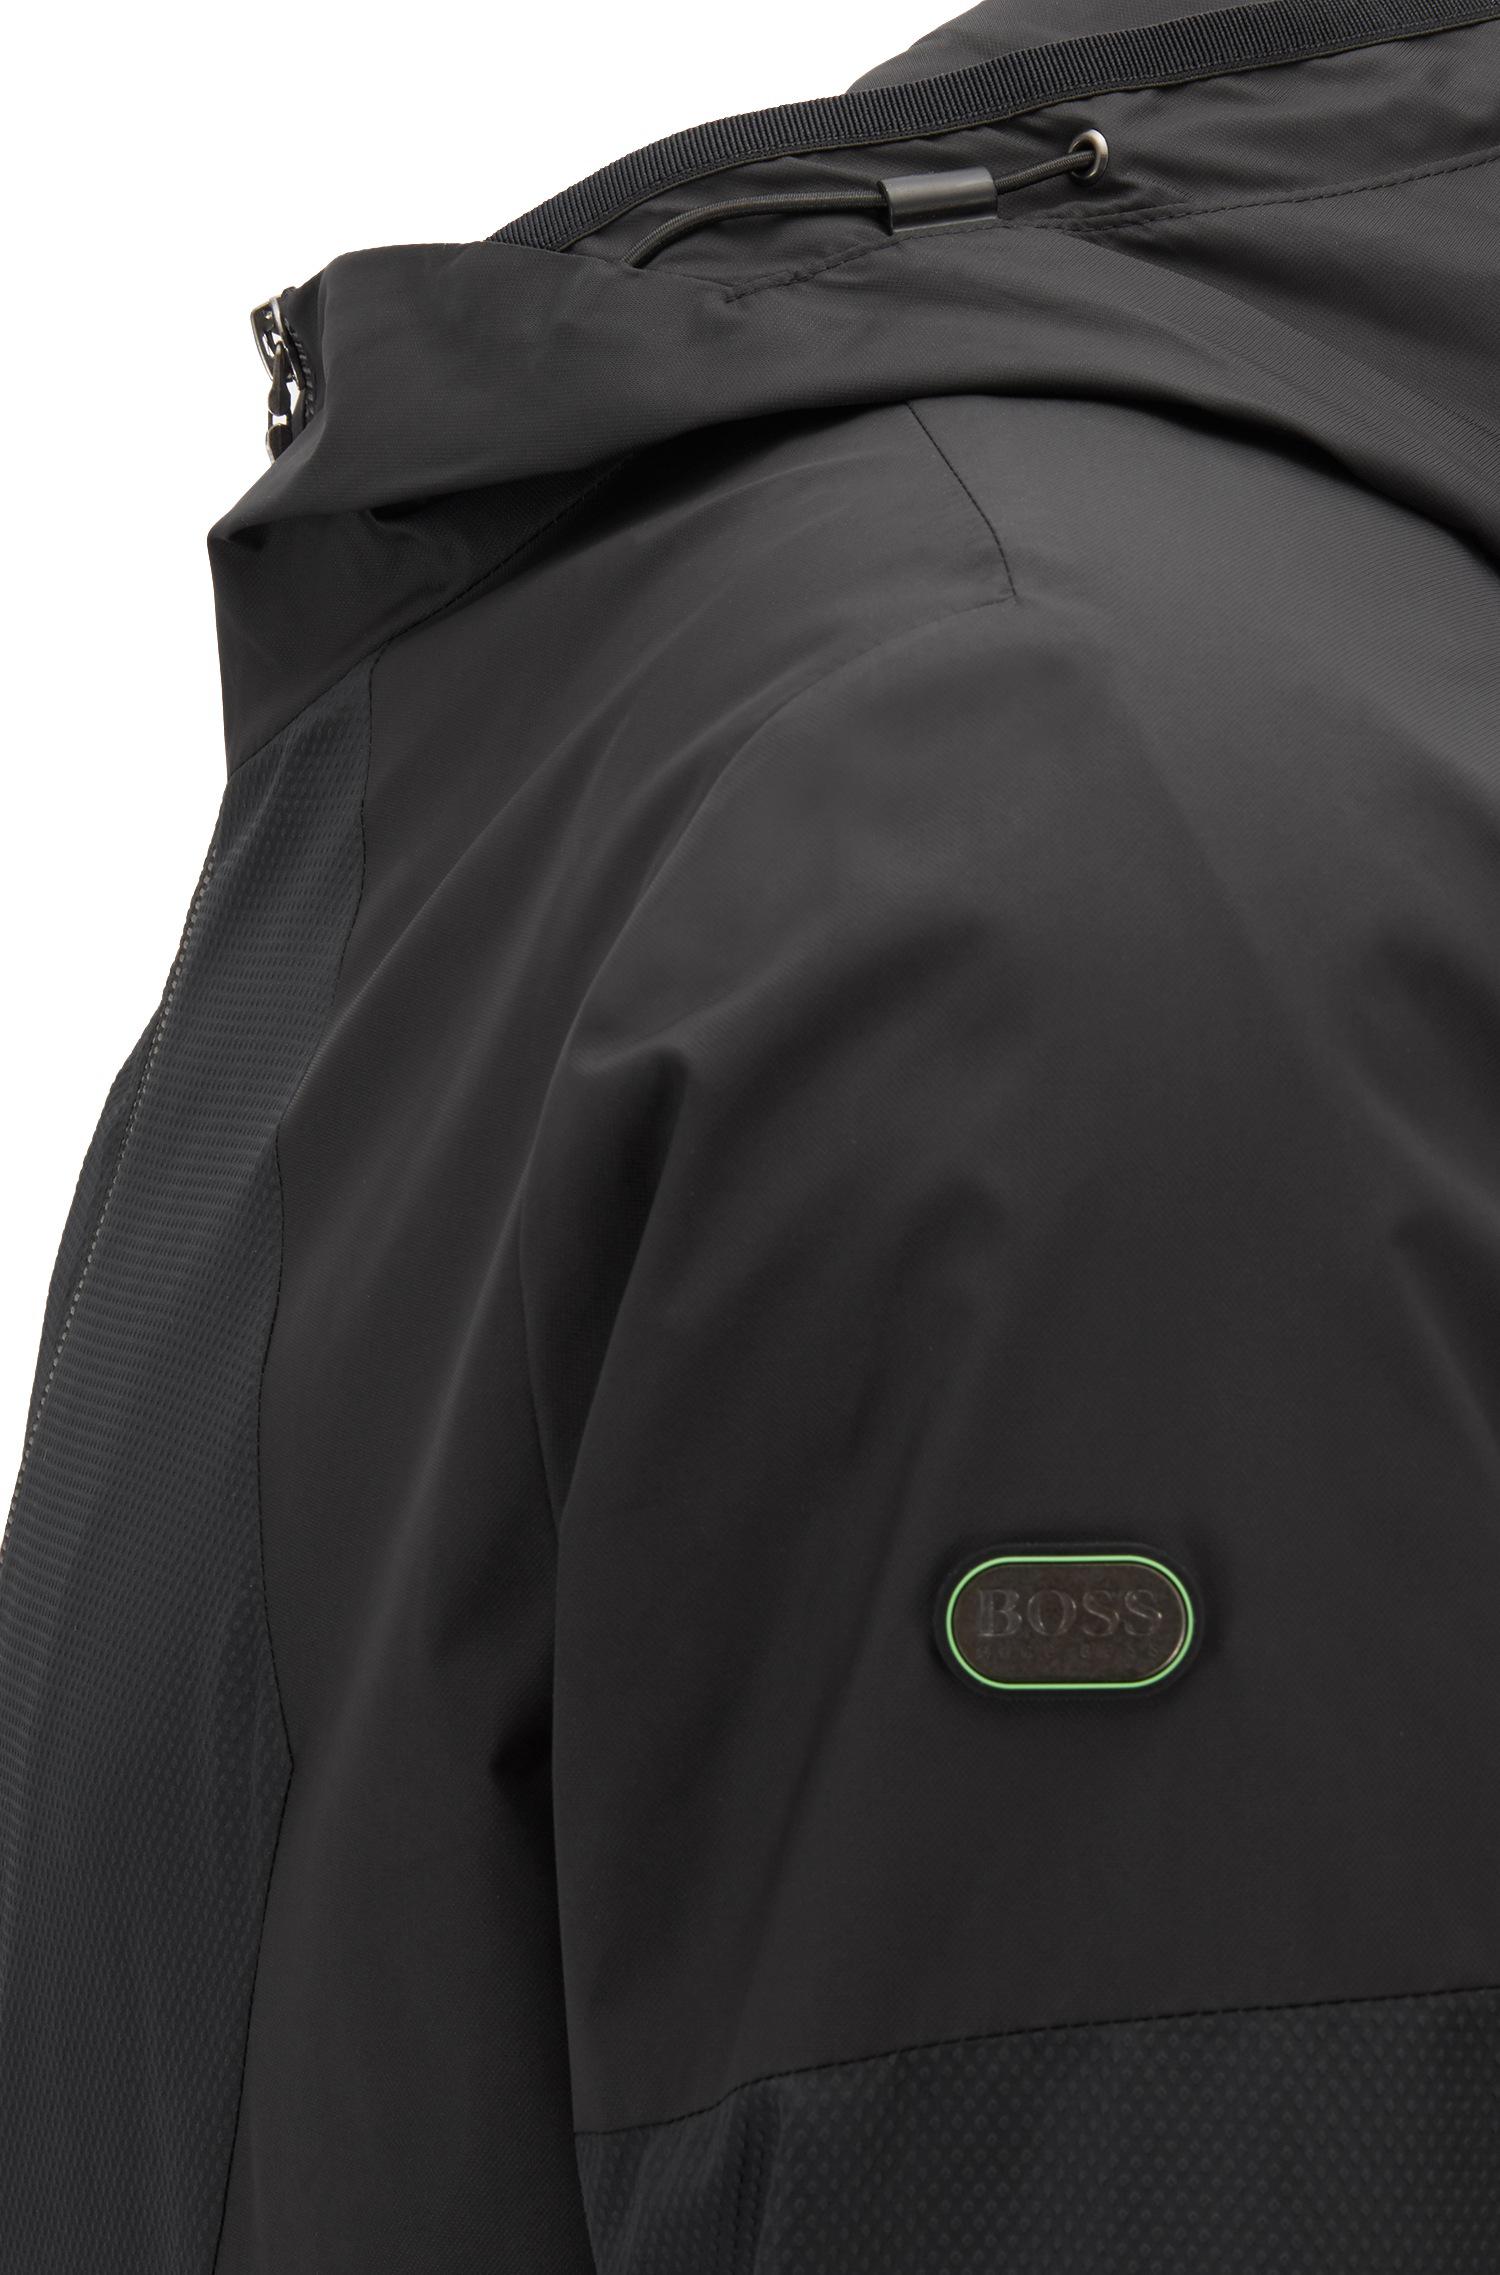 Hugo Boss Waterproof Jacket Online Sale, UP TO 58% OFF